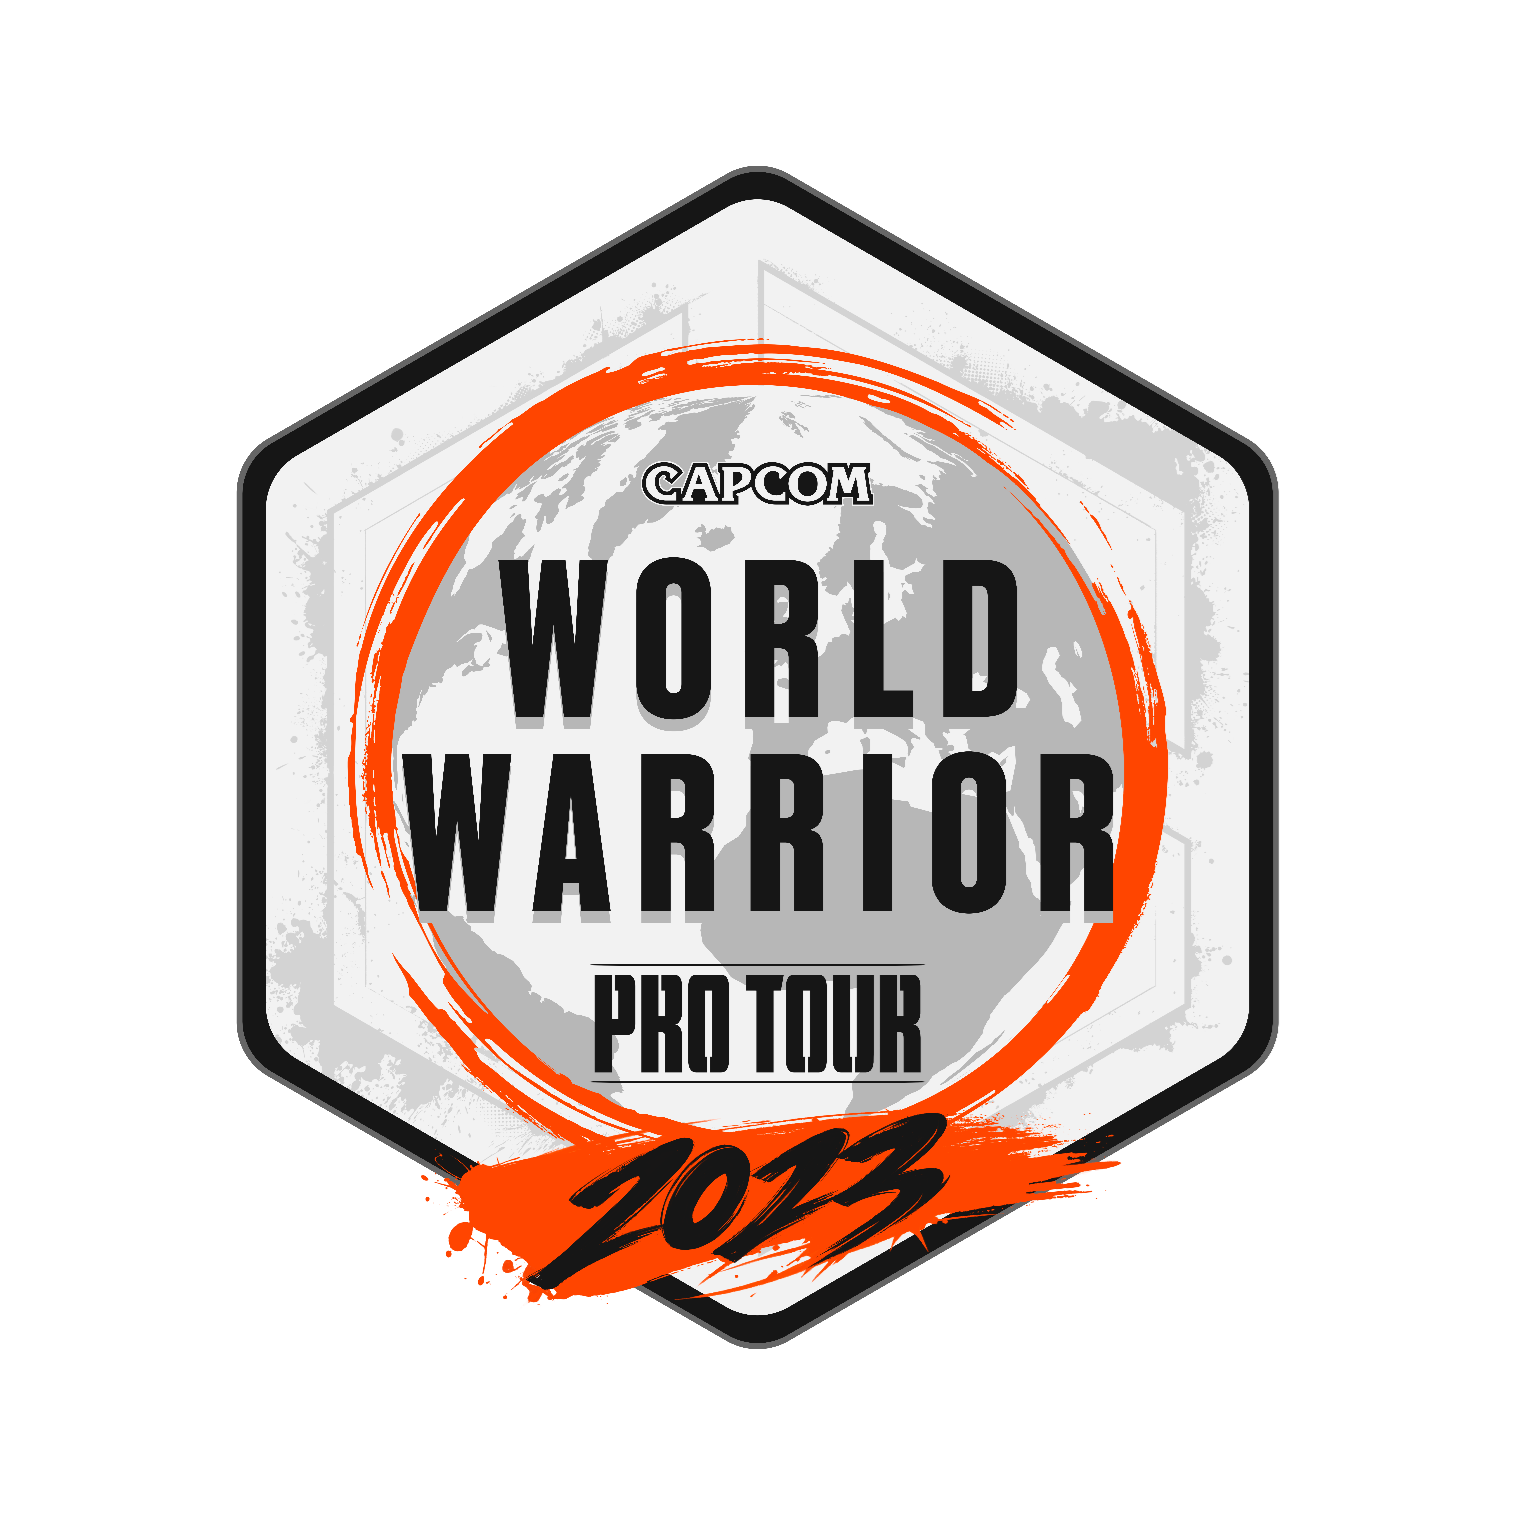 「CAPCOM Pro Tour 2023 ワールドウォリアー 日本大会」
トーナメントオーガナイザー就任ならびに
大会エントリー受付開始のご案内